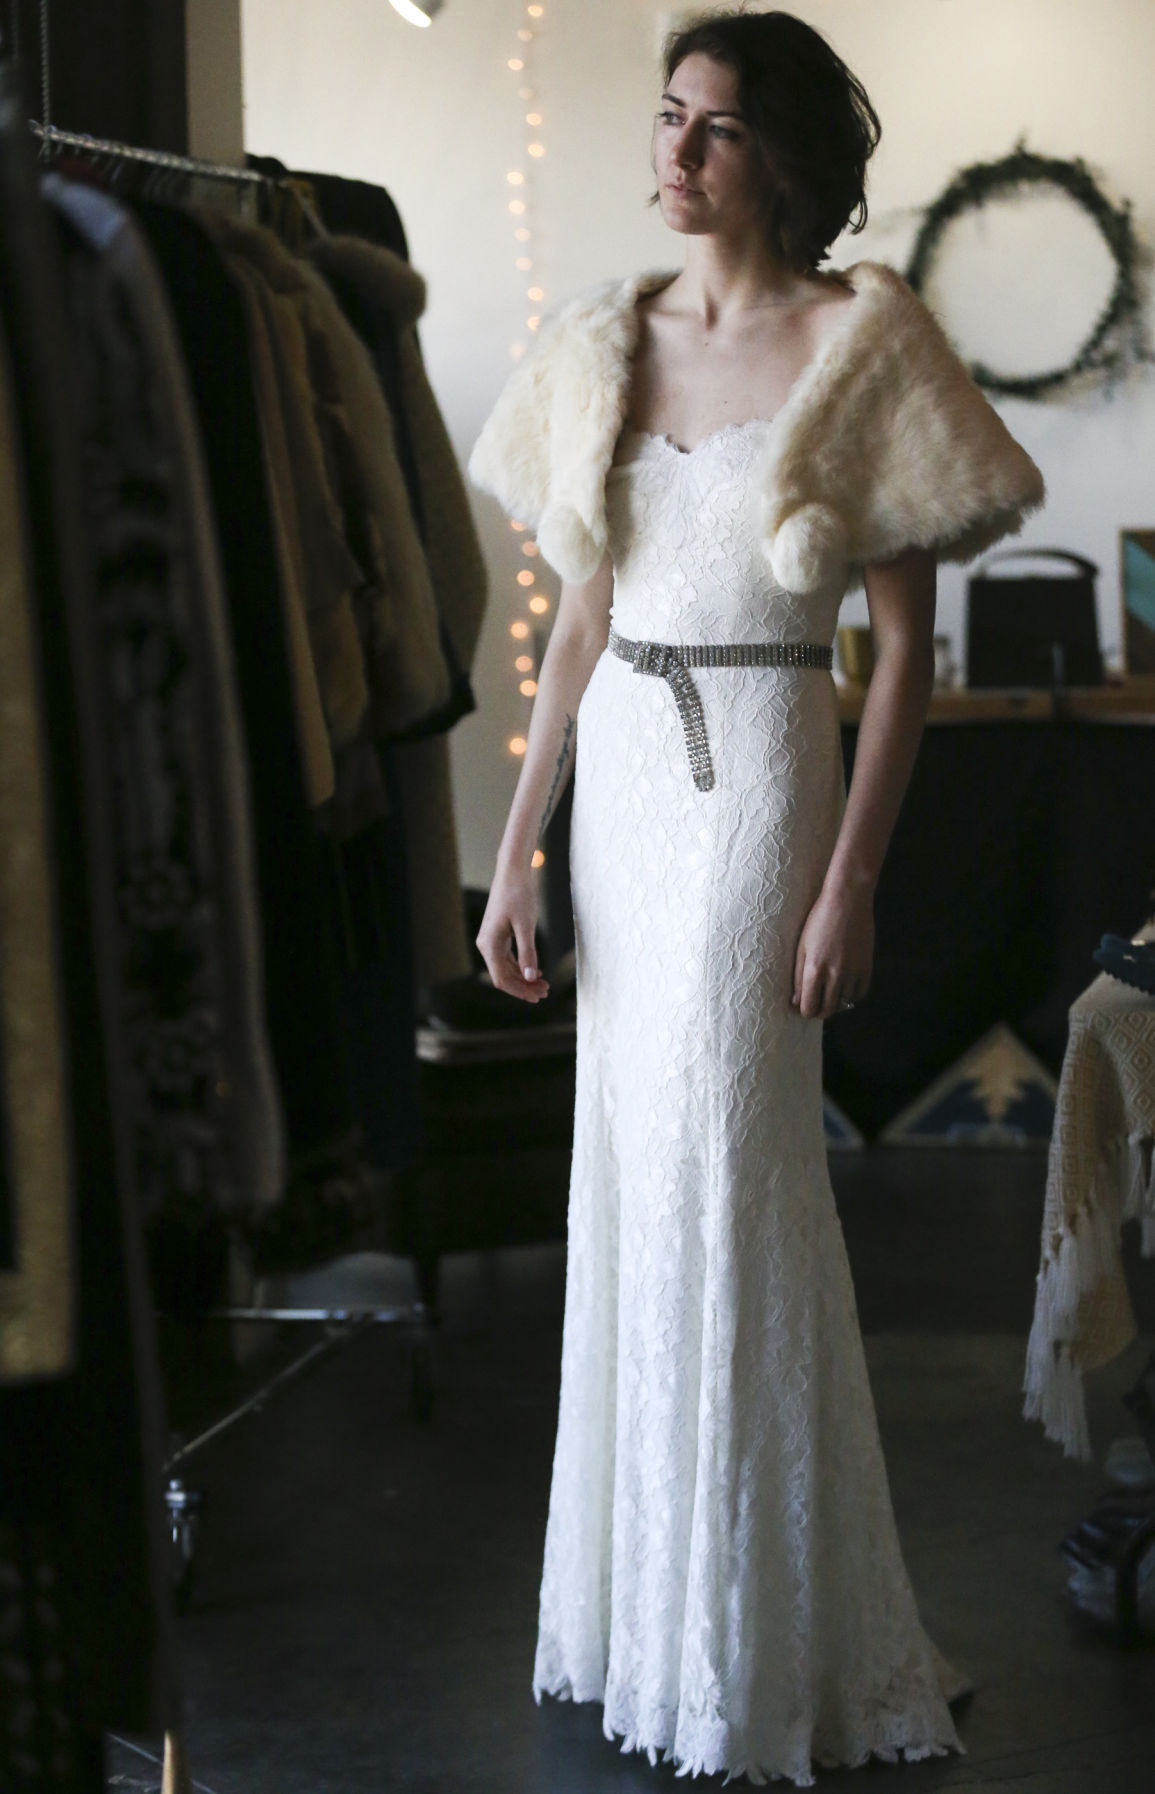 Why buy vintage and resale wedding dresses | Lifestyles | tulsaworld.com